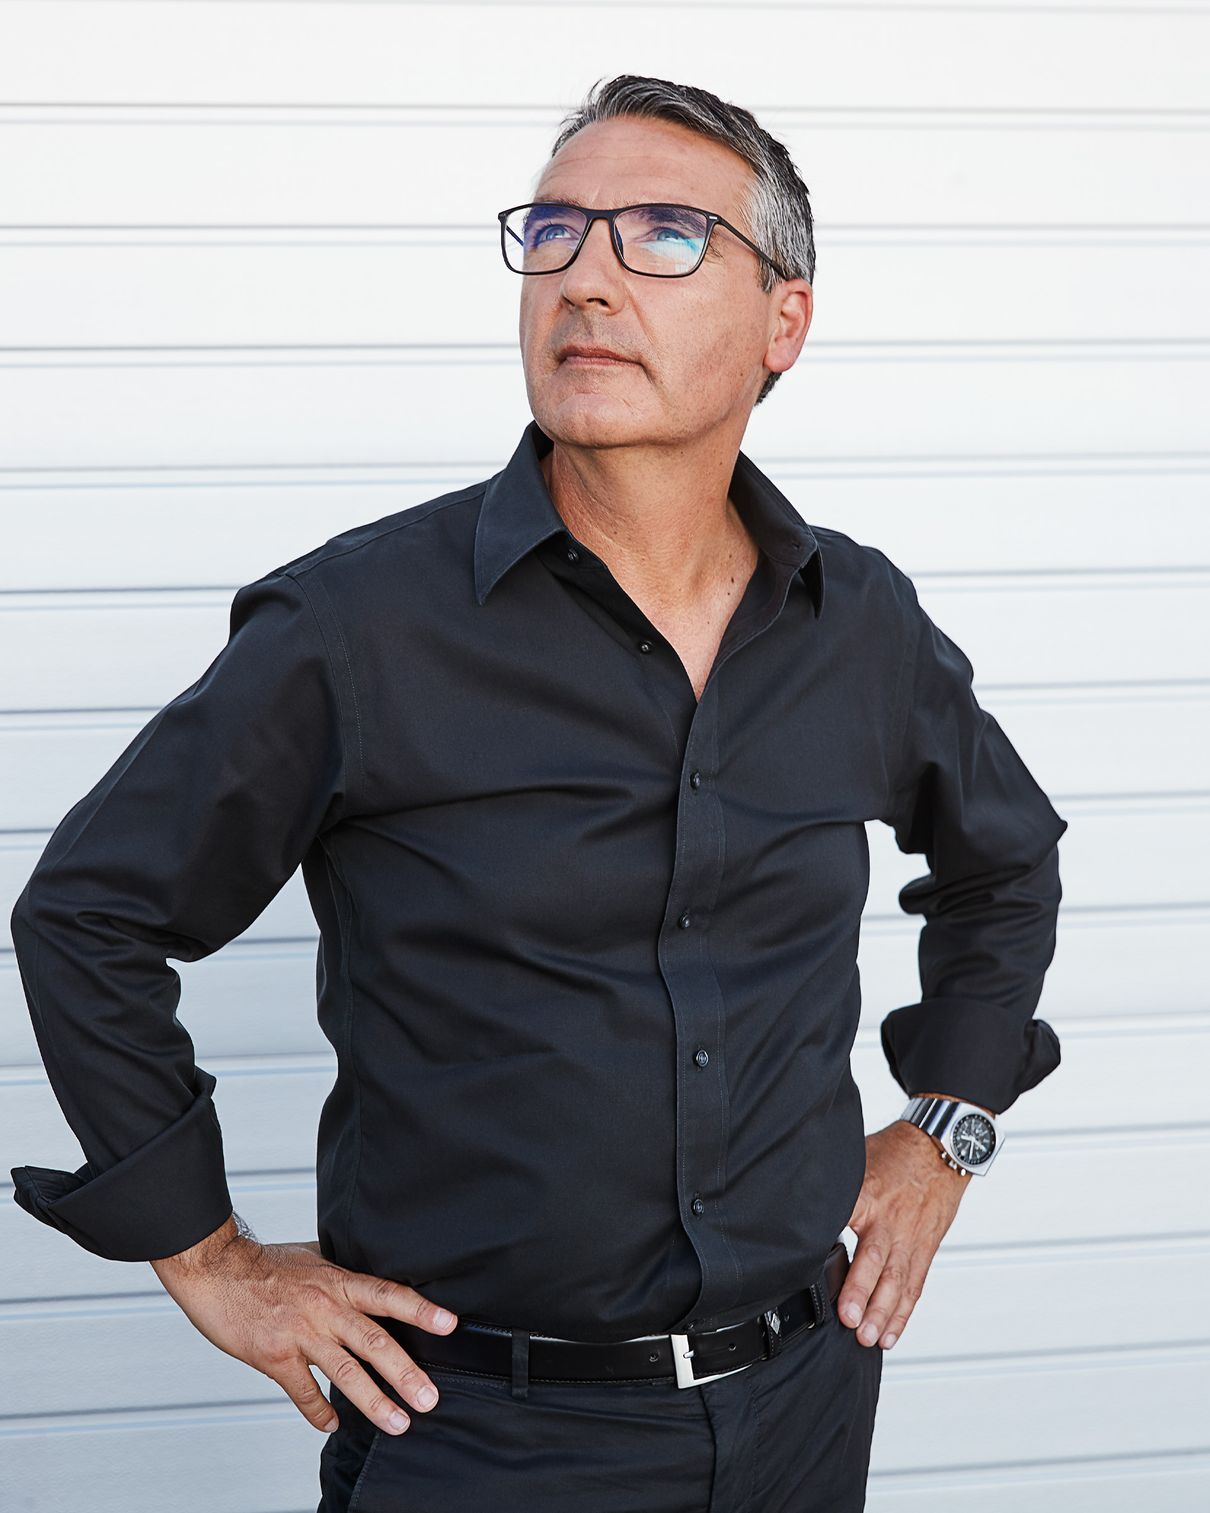 César Muntada is head of light design at Audi.